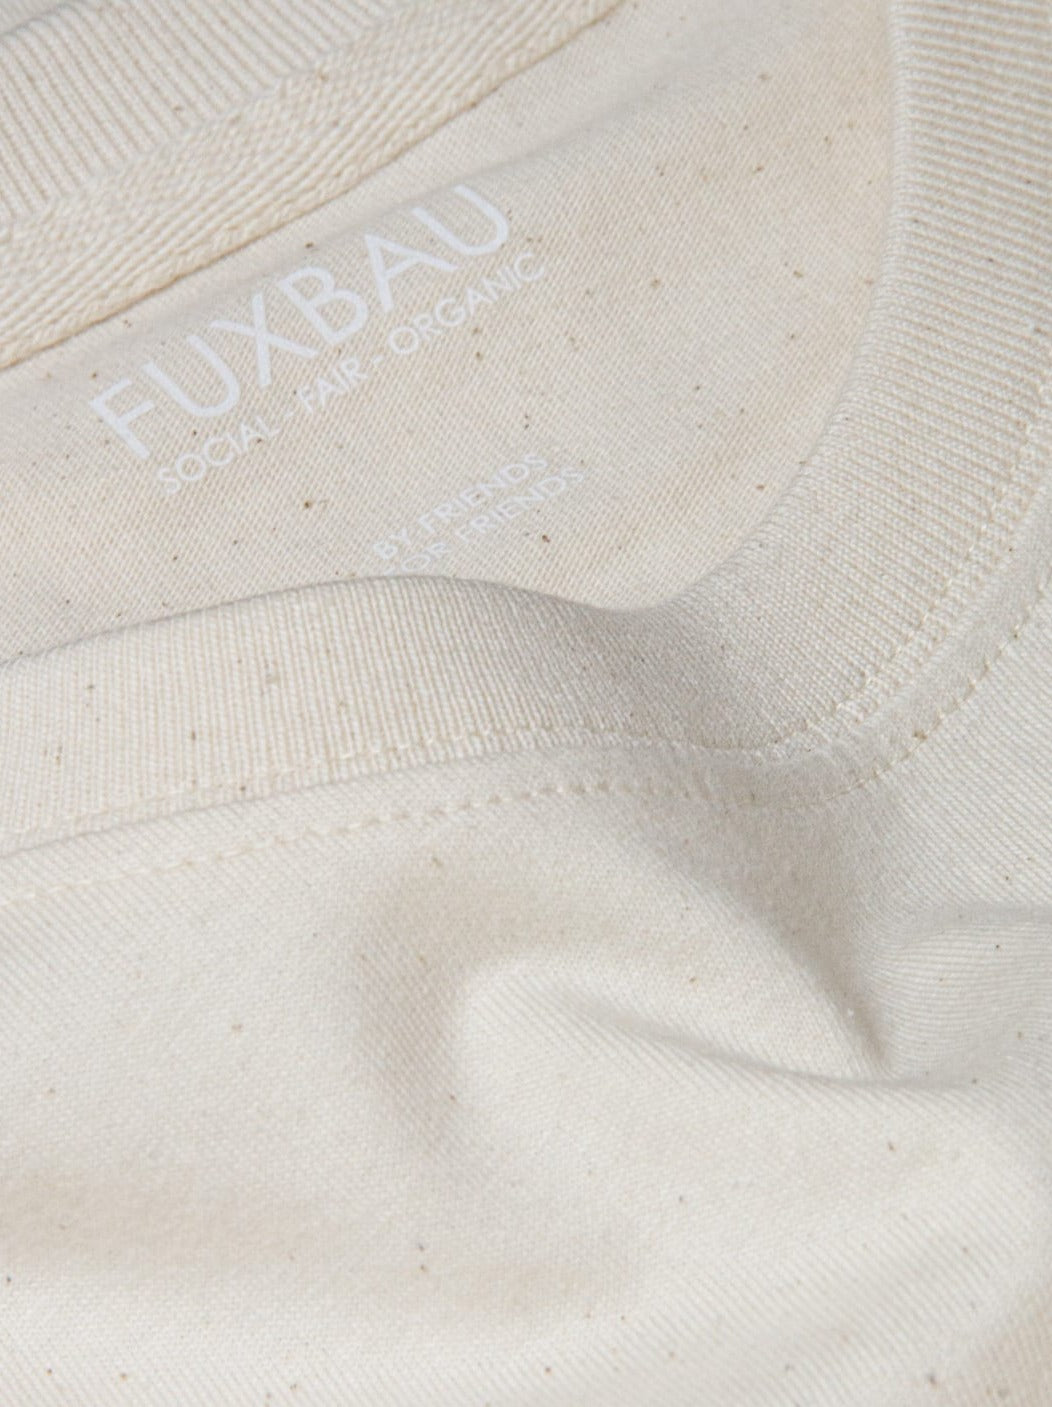 Imprint im natur ungefärbten Basic T-shirt FUXBAU social - fair - organic